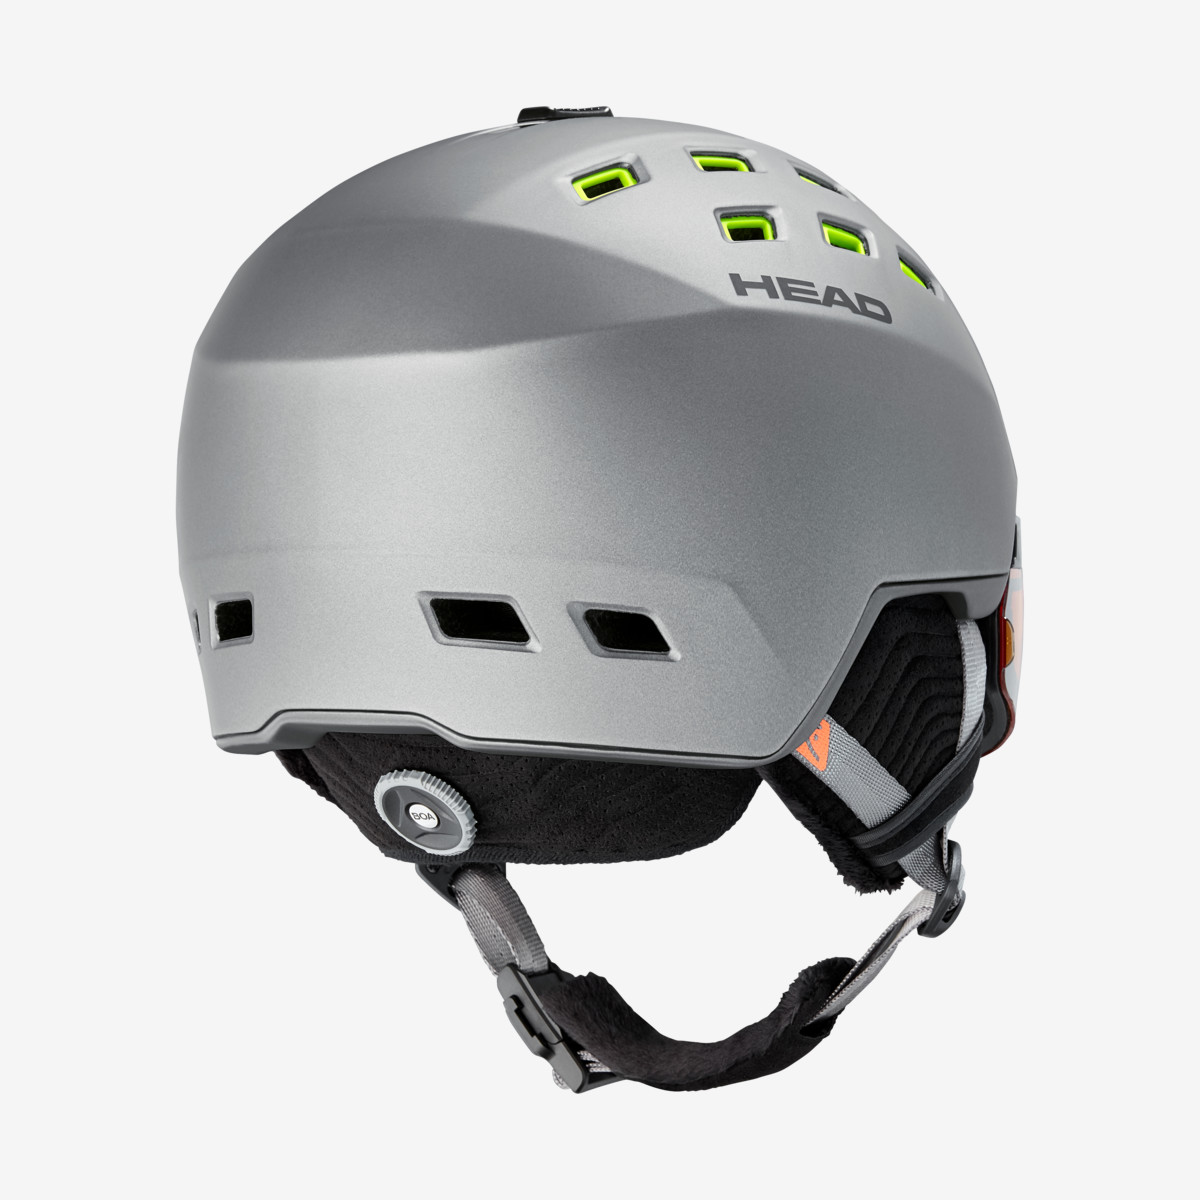 Ski Visor Helmet -  head RADAR VISOR SKI HELMET